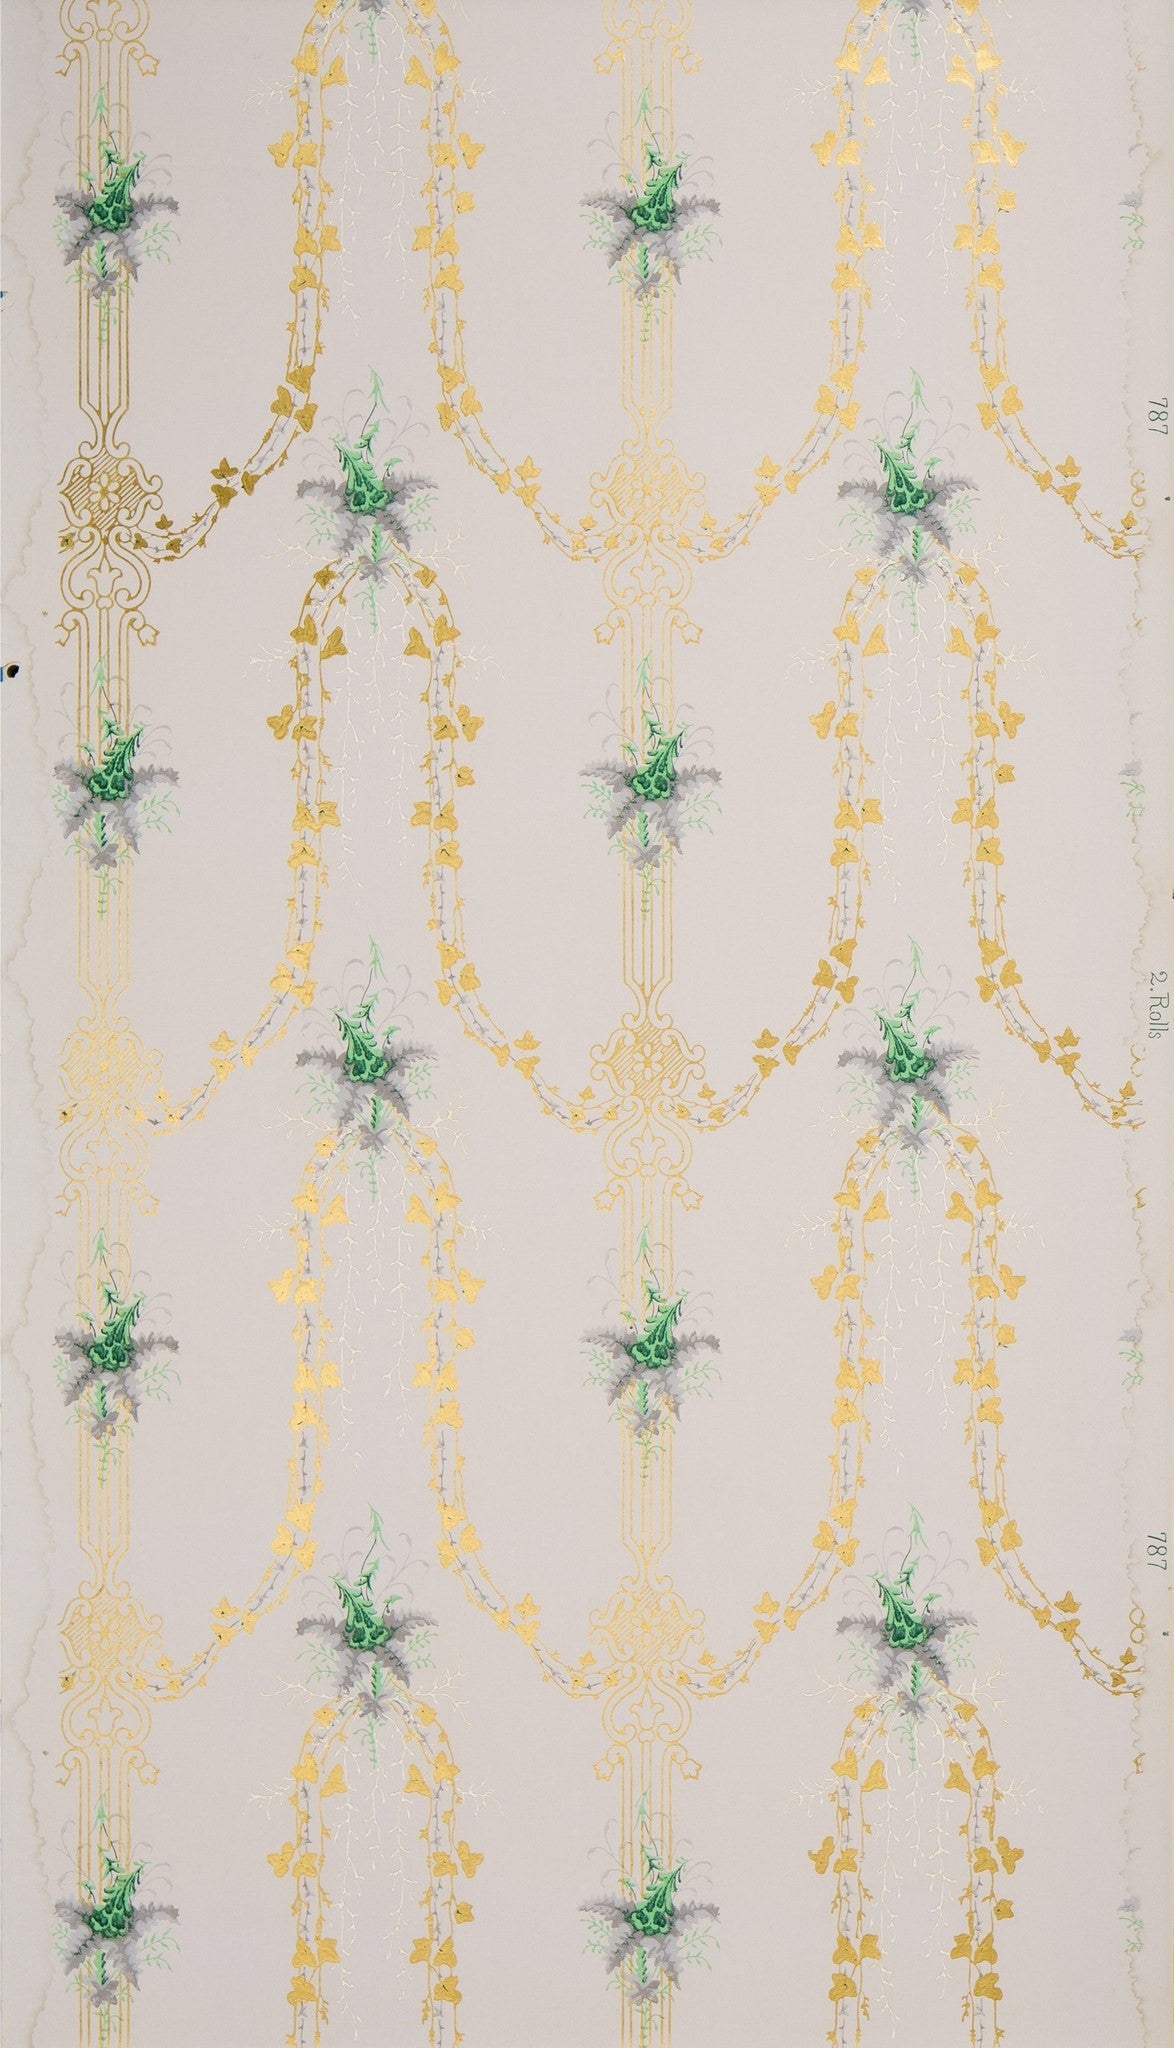 Delicate Foliate Sprays and Gilt Vines - Antique Wallpaper Remnant